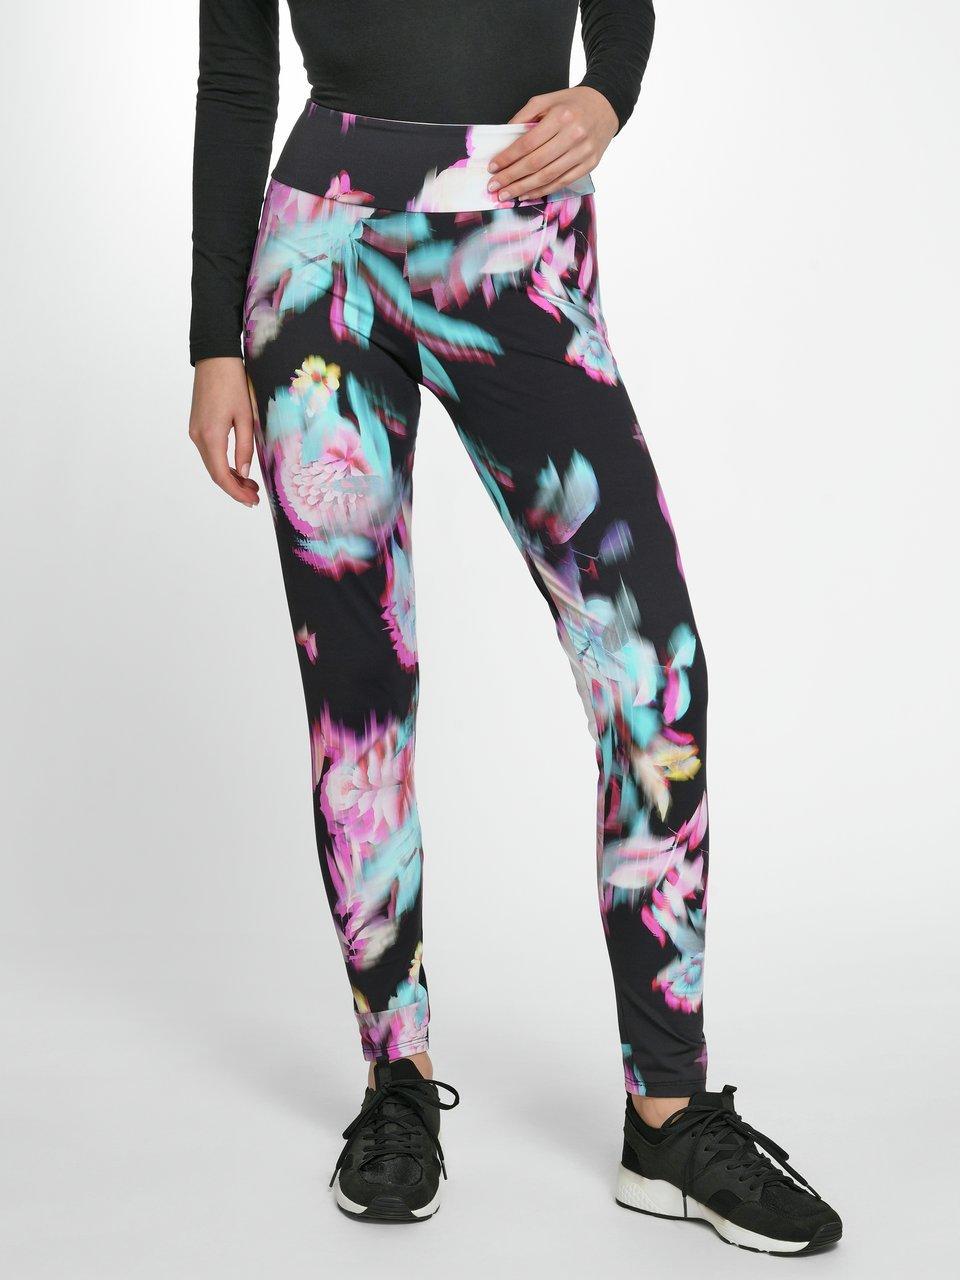 DEHA - Enkellange legging met bloemenprint zwart/multicolour